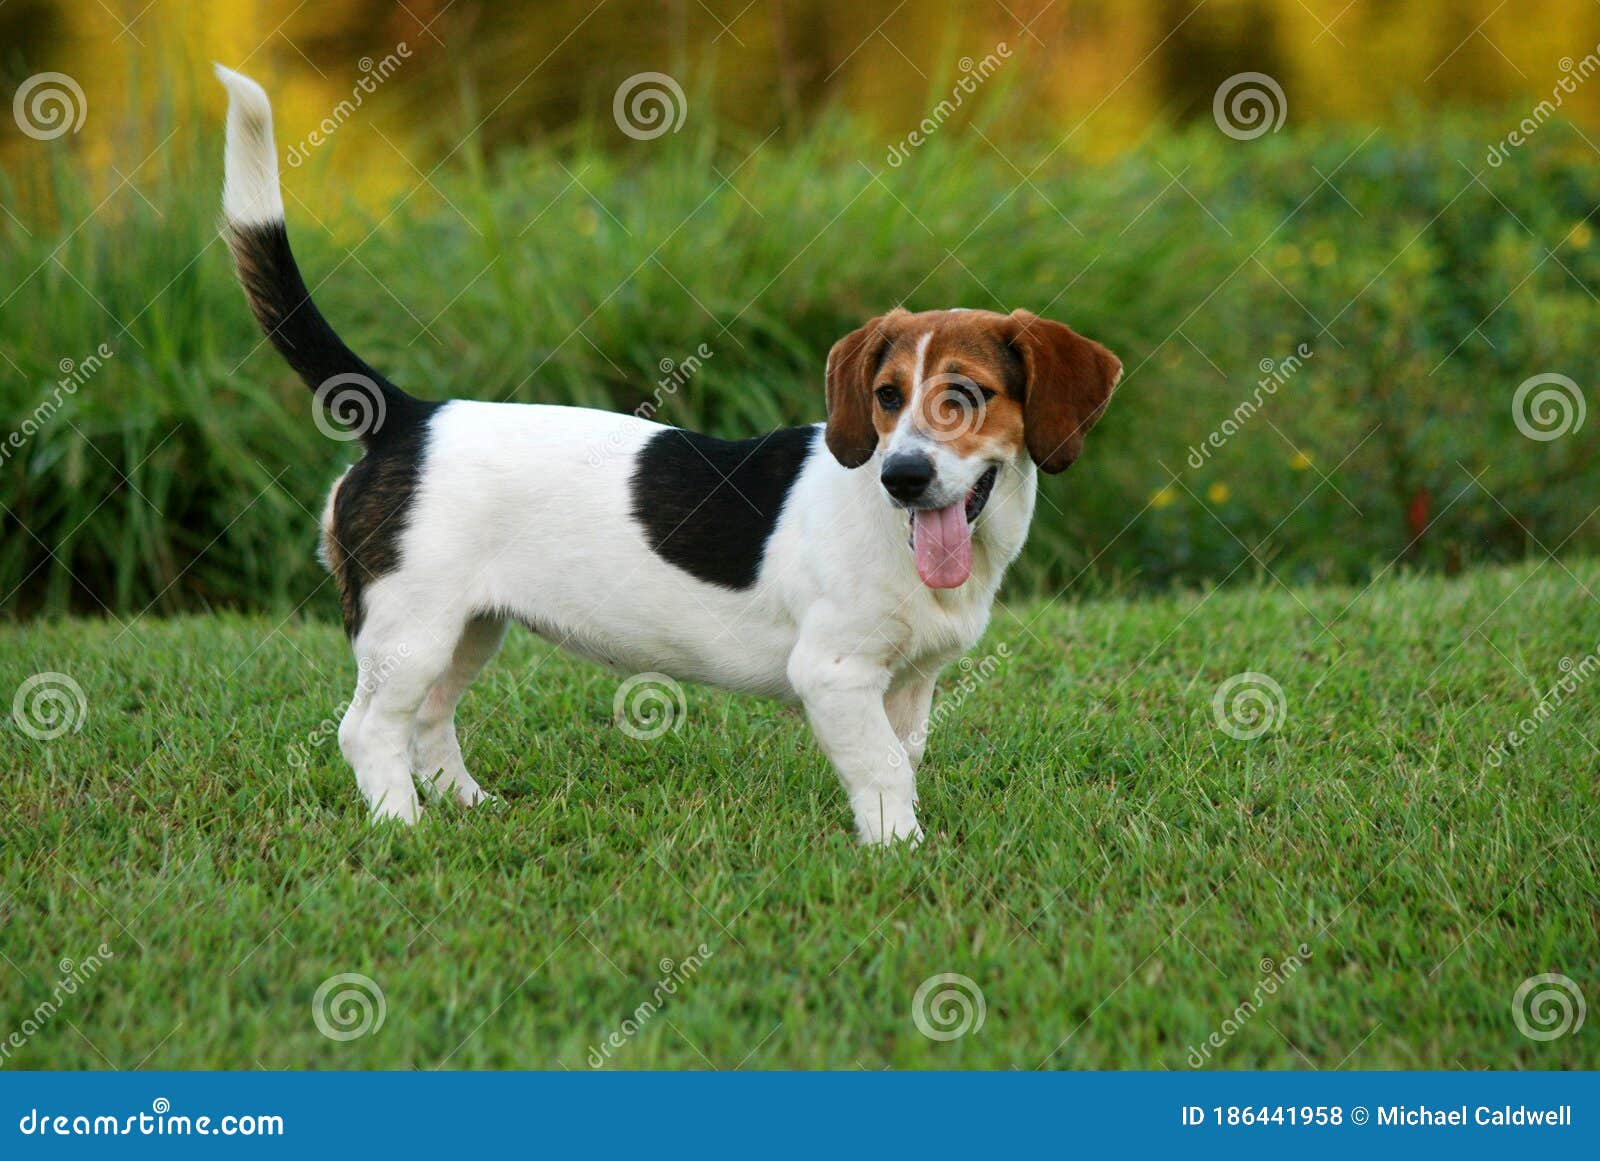 Beagle Basset Hound Mix Posing For The Camera Stock Photo Image Of Mowed Yard 186441958